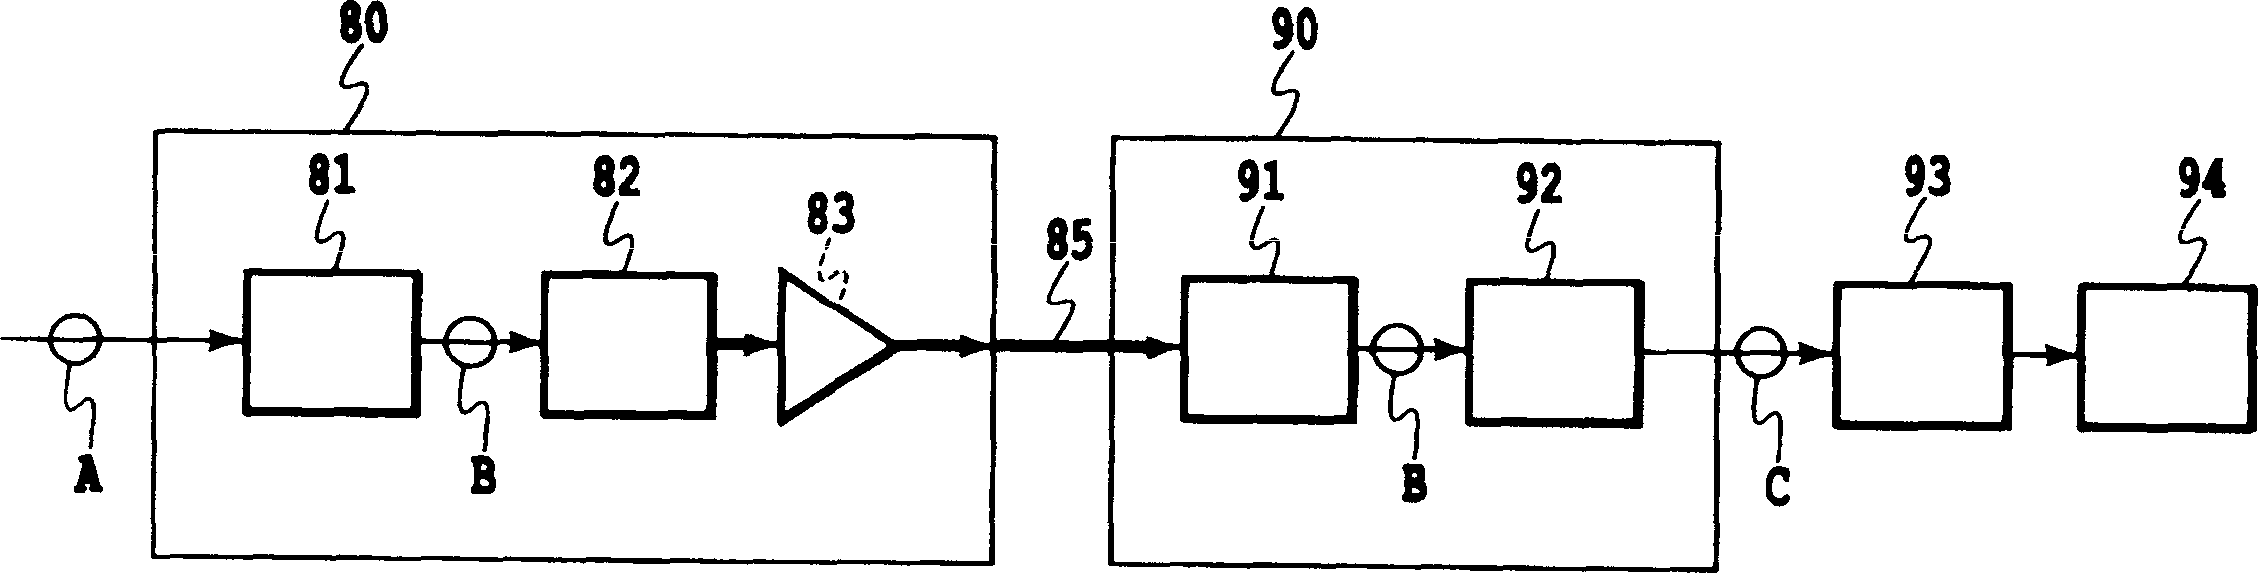 Optical signal receiver, optical signal receiving apparatus, and optical signal transmitting system